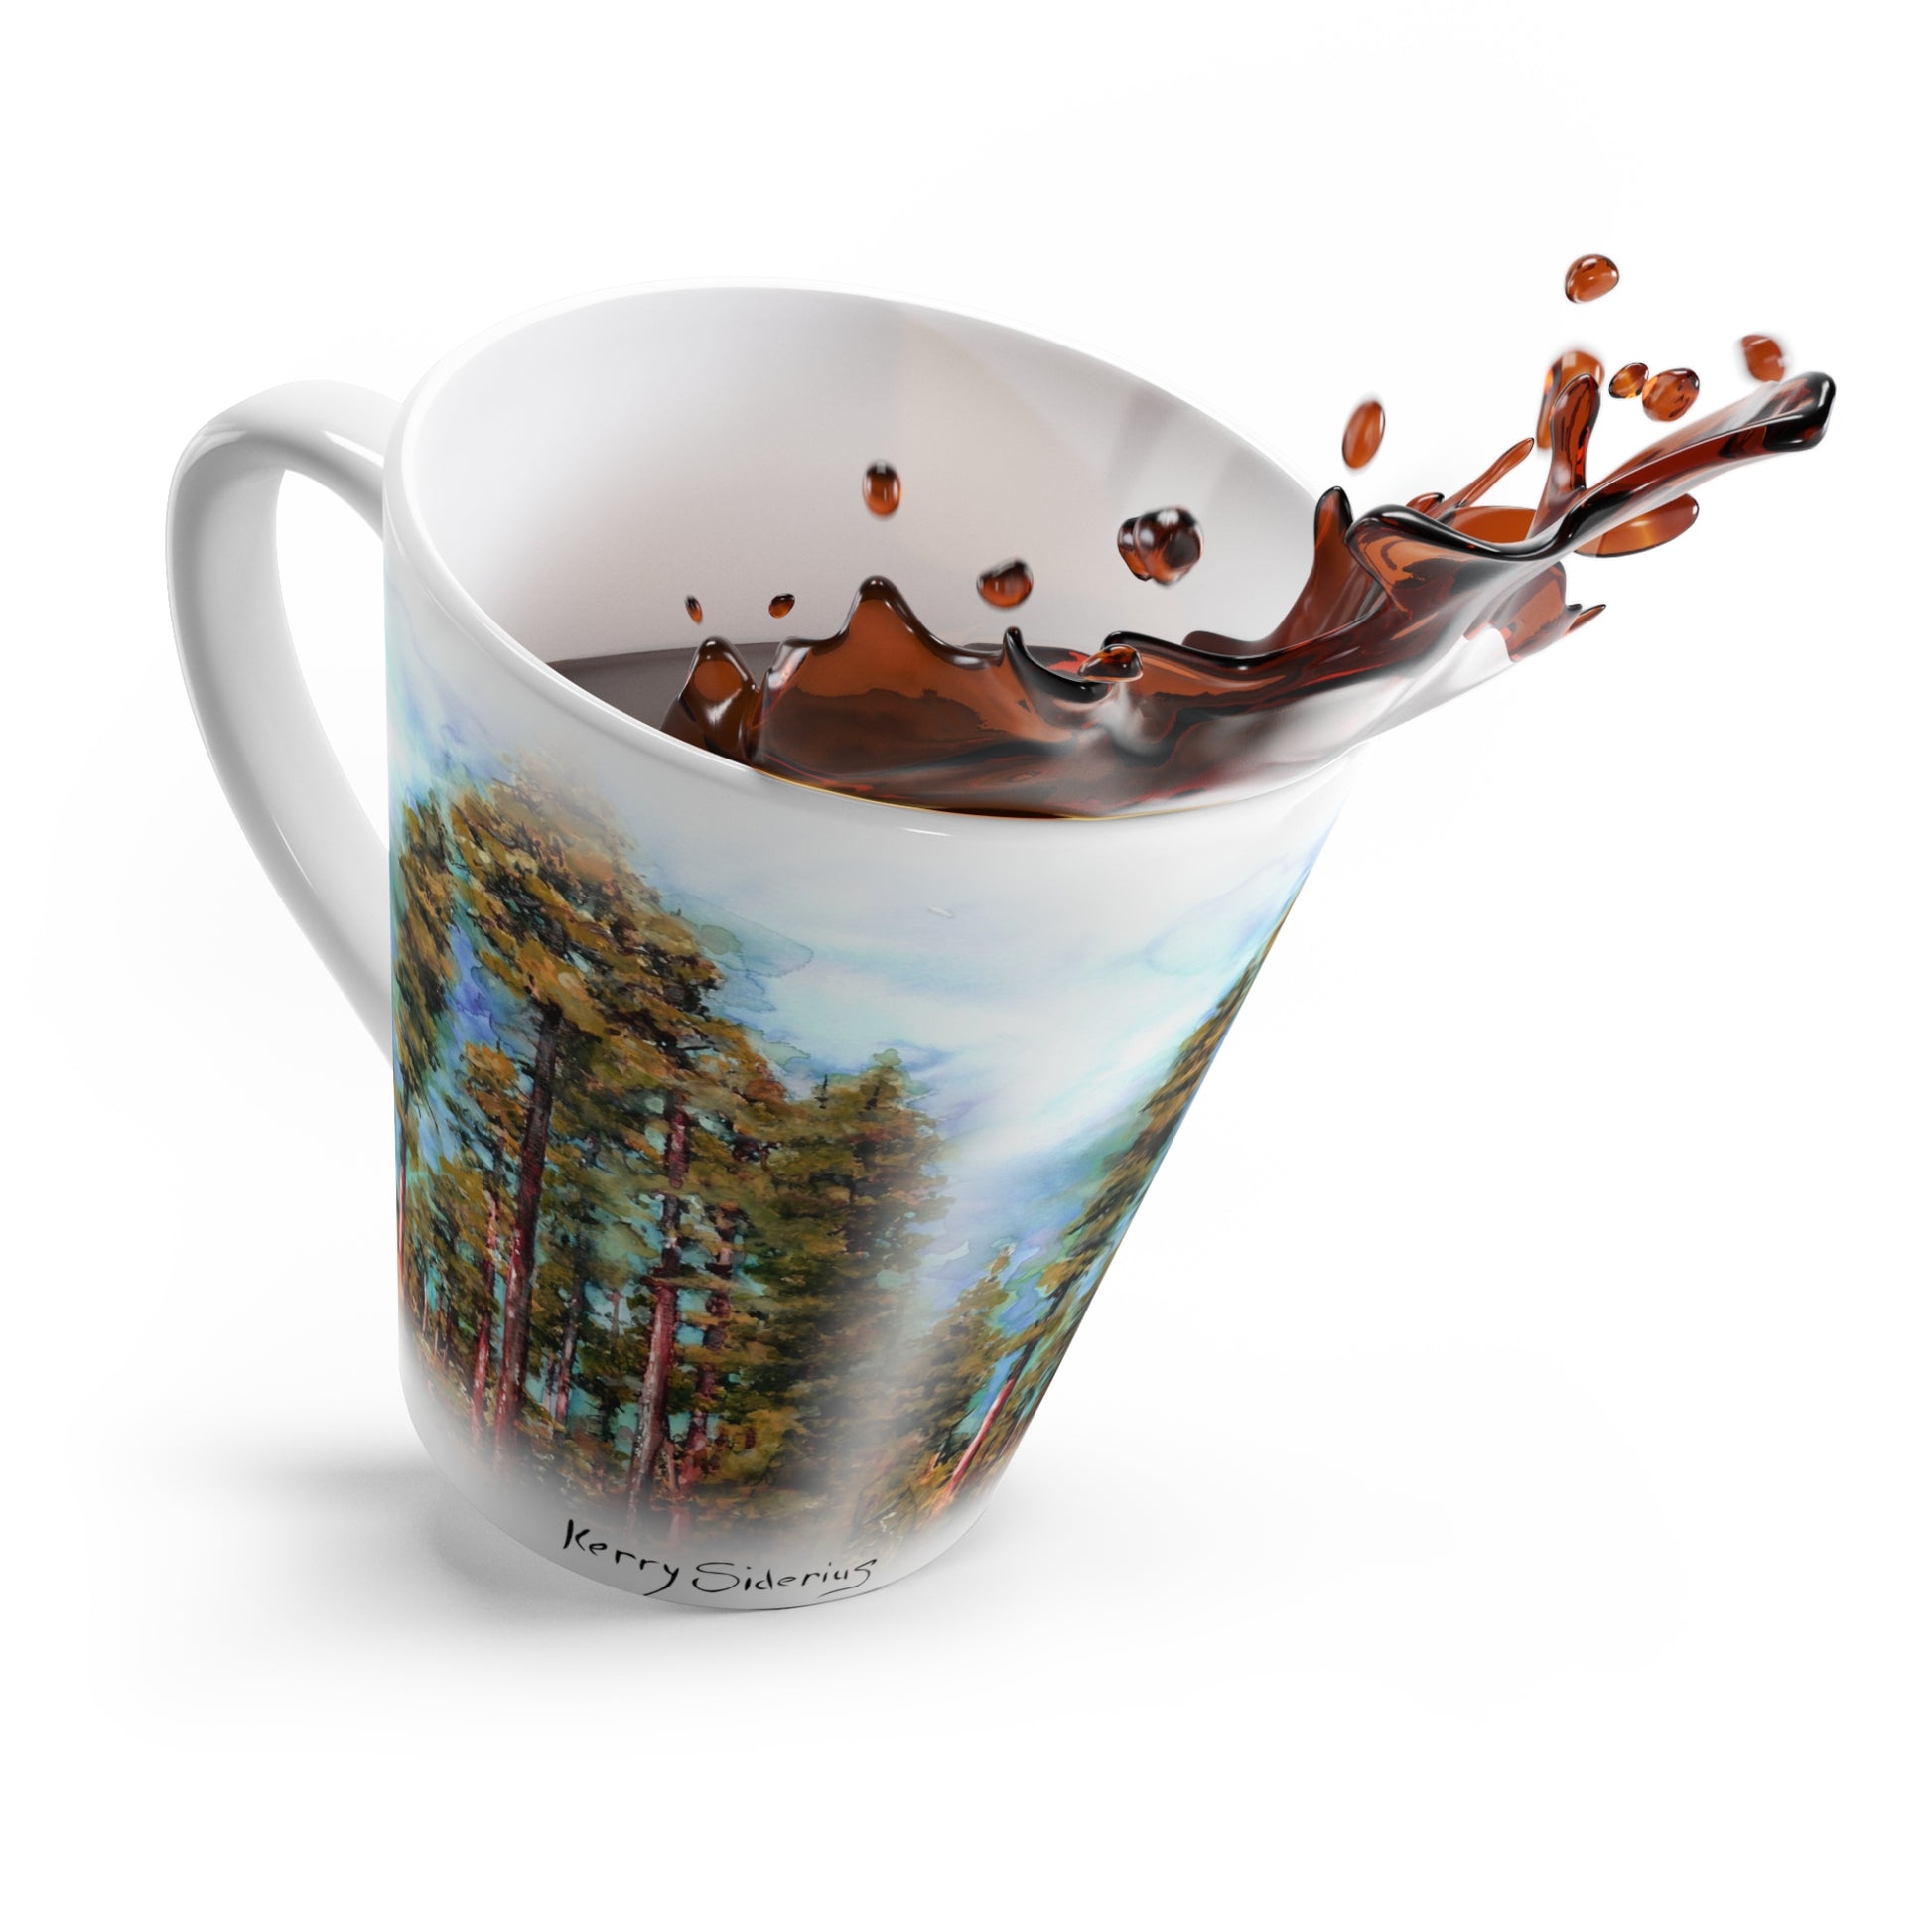 "Meeting of the Pines" Latte Mug - Kerry Siderius Art 